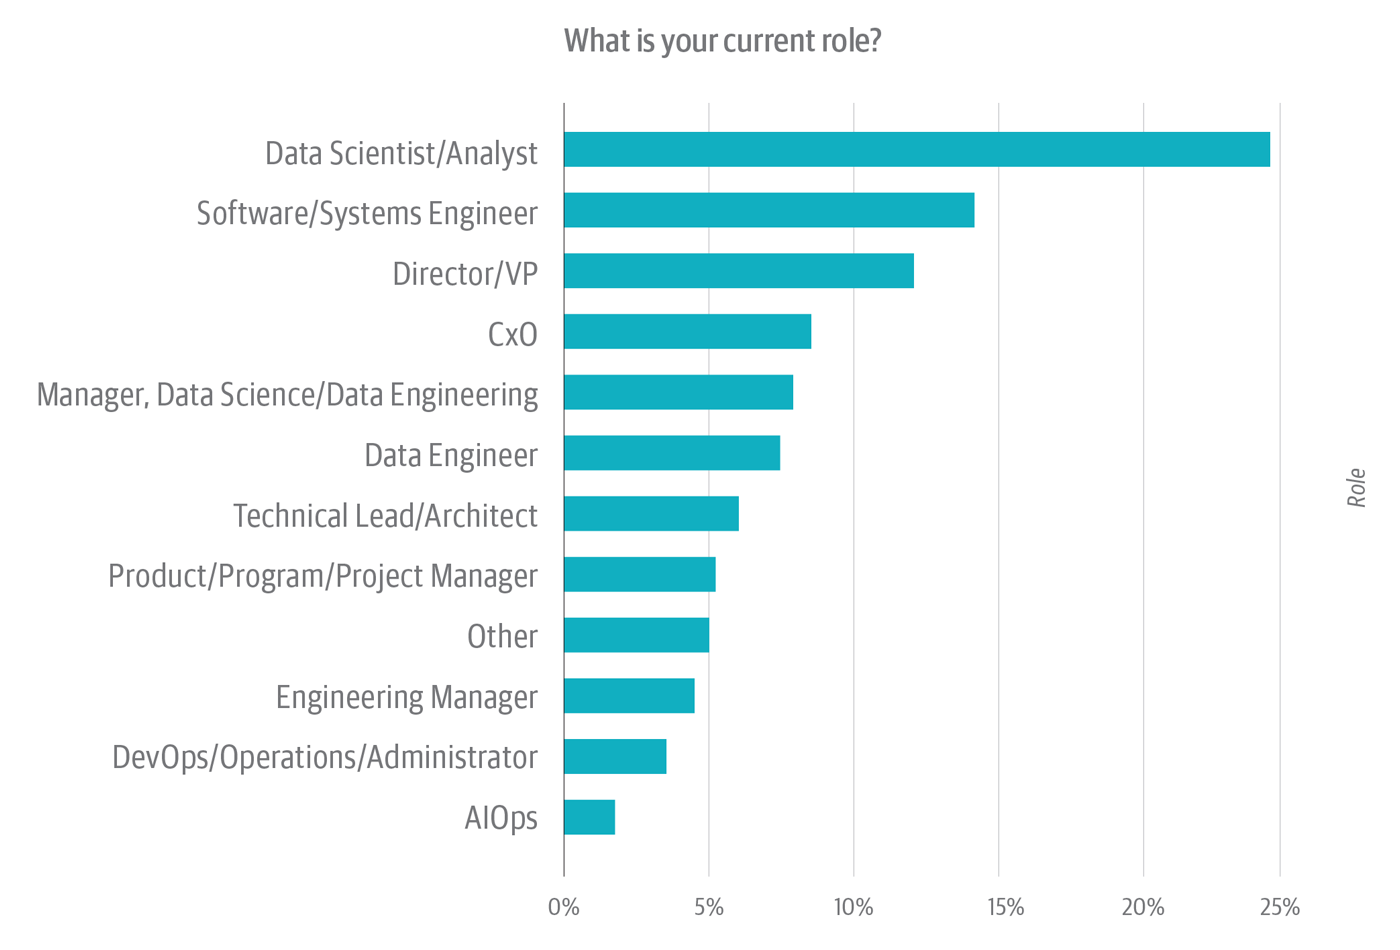 Roles of survey respondents